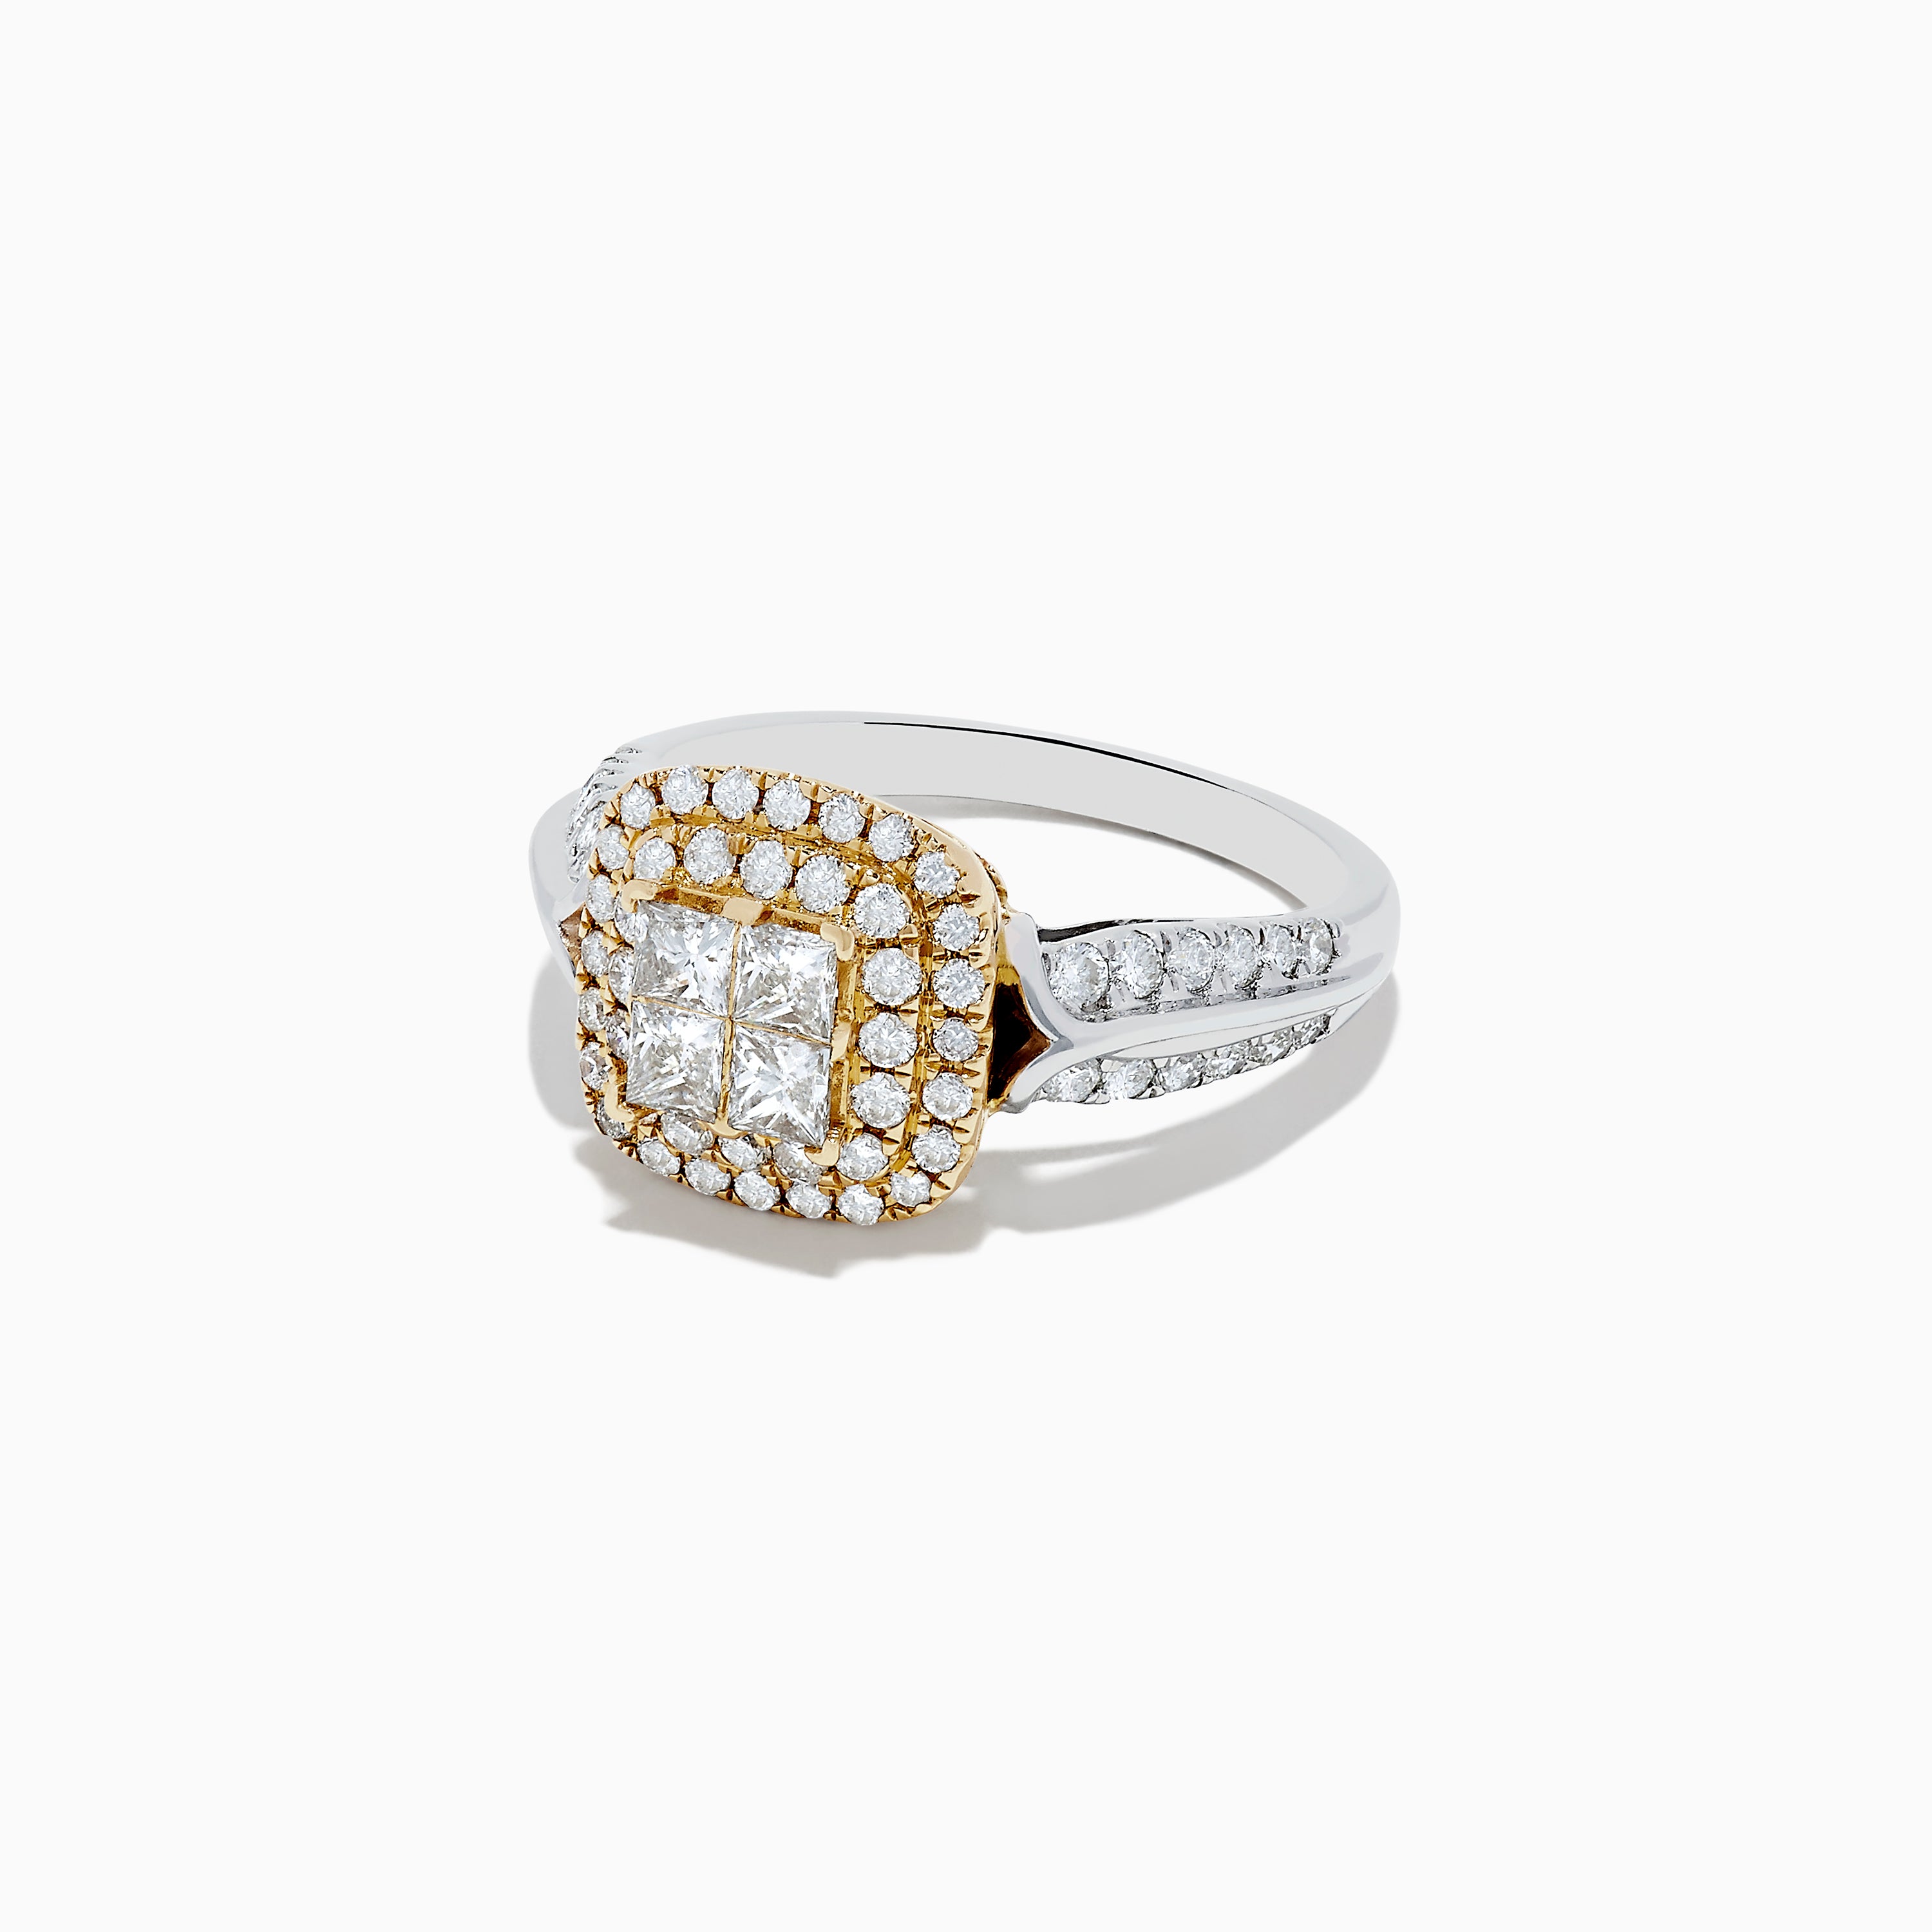 14K White and Yellow Gold Diamond Ring, 1.25 TCW